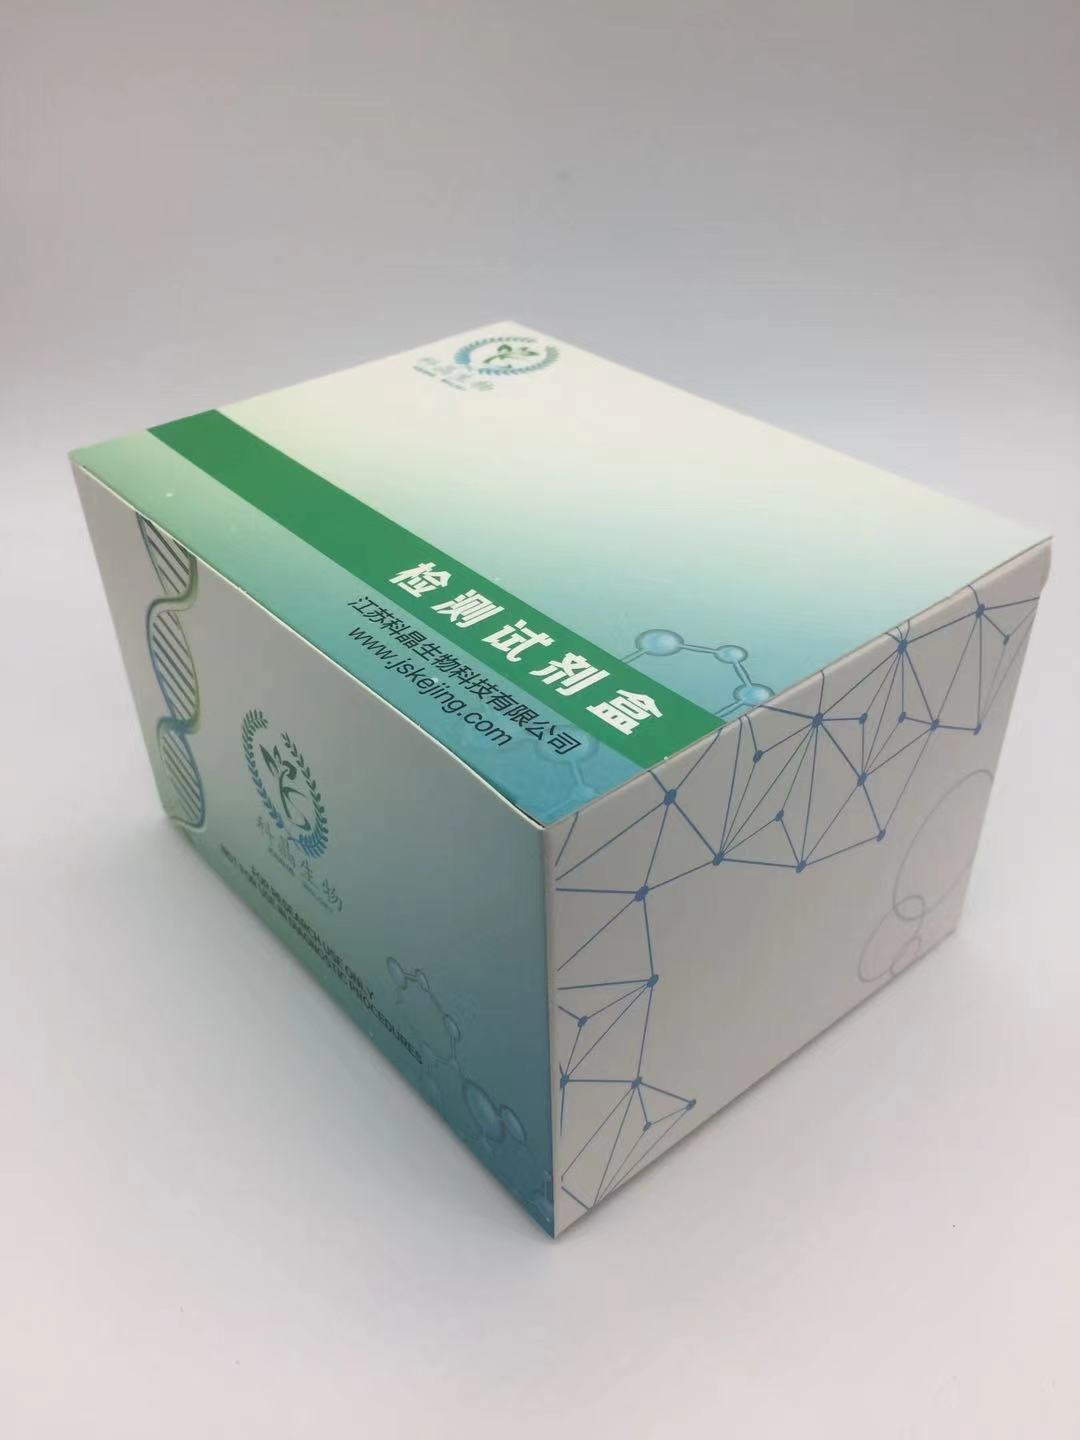 鸡透明质酸(HA)ELISA试剂盒